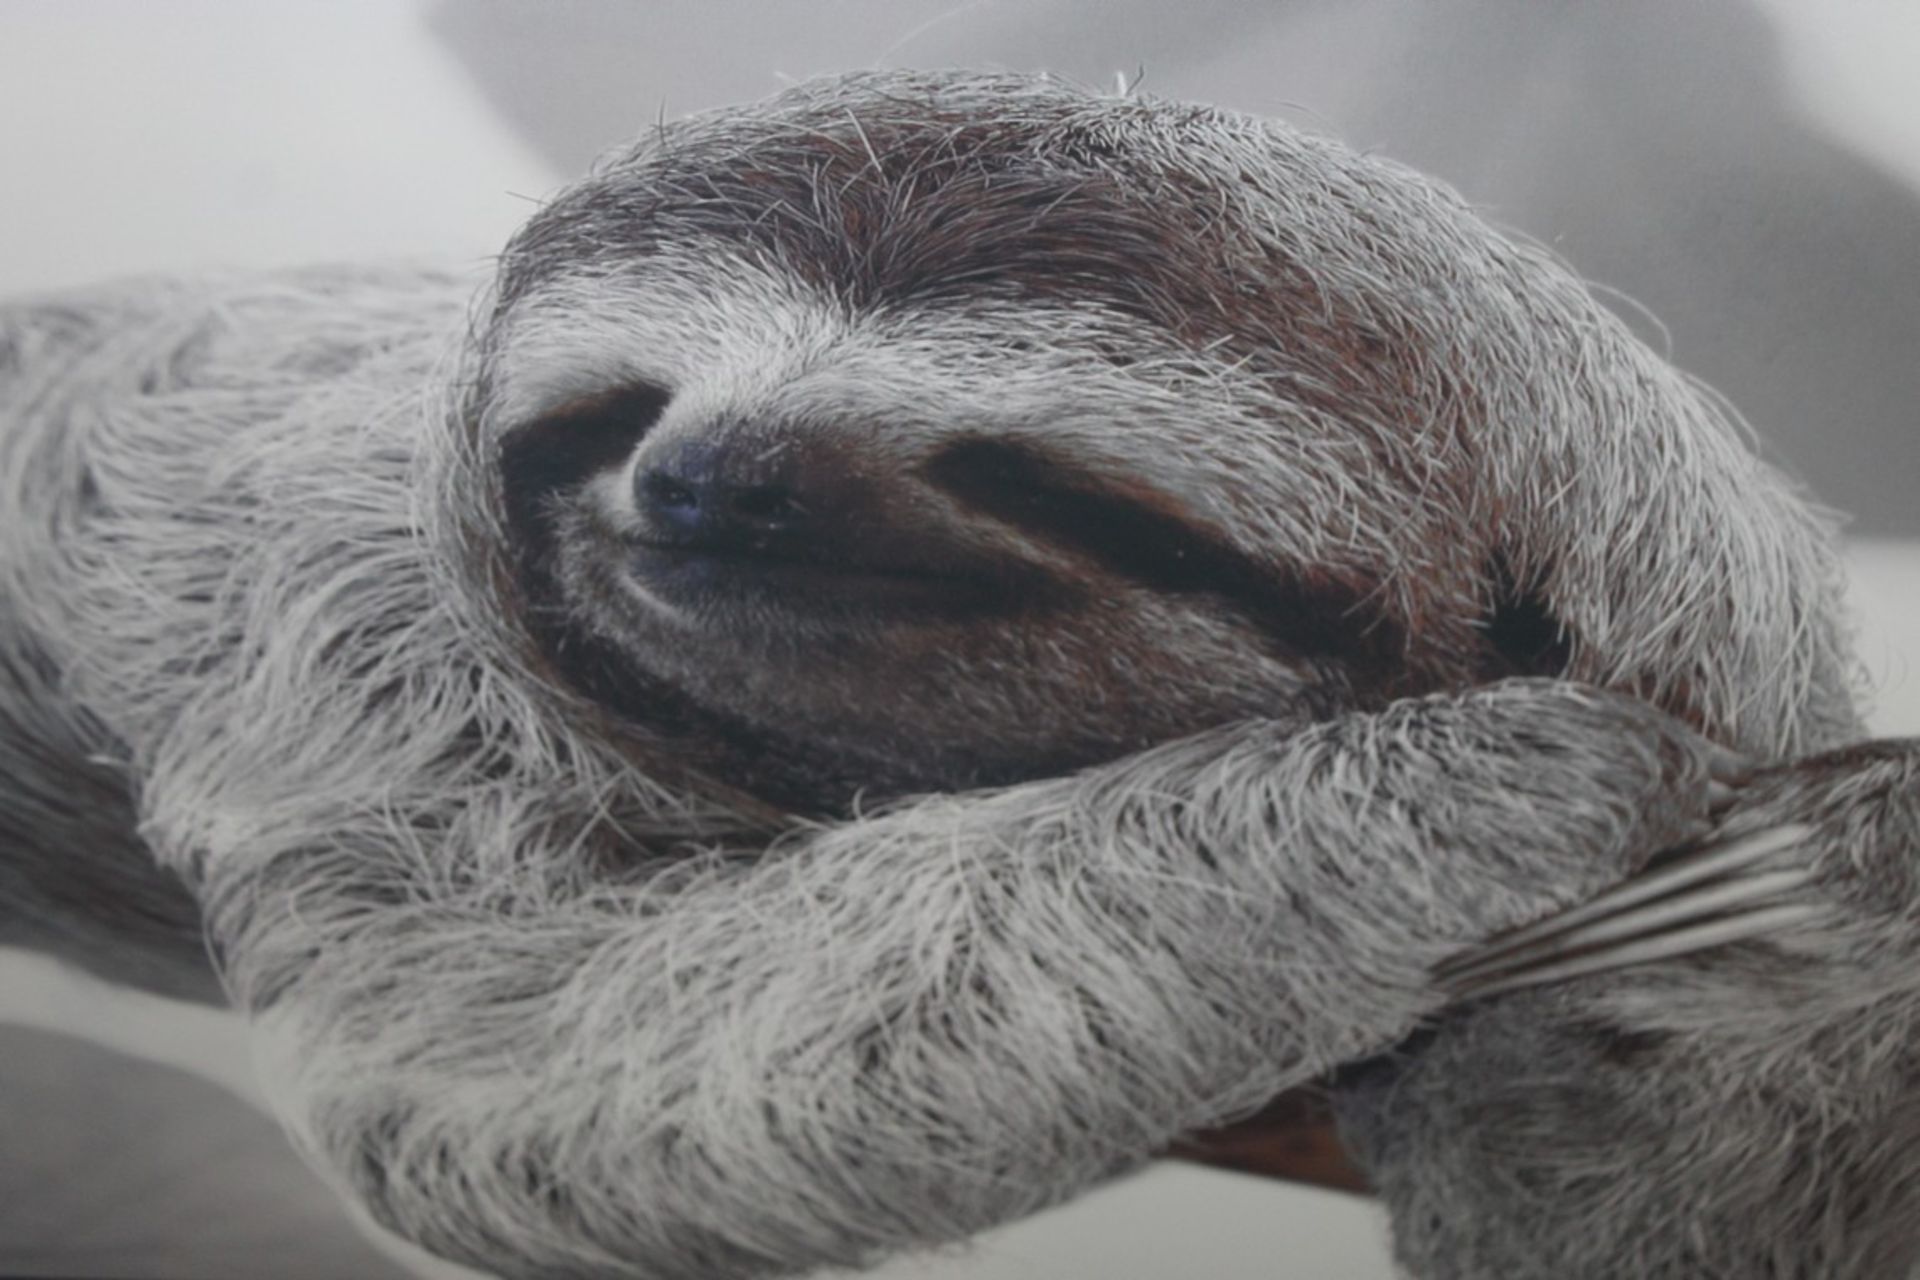 The Lazy Sloth